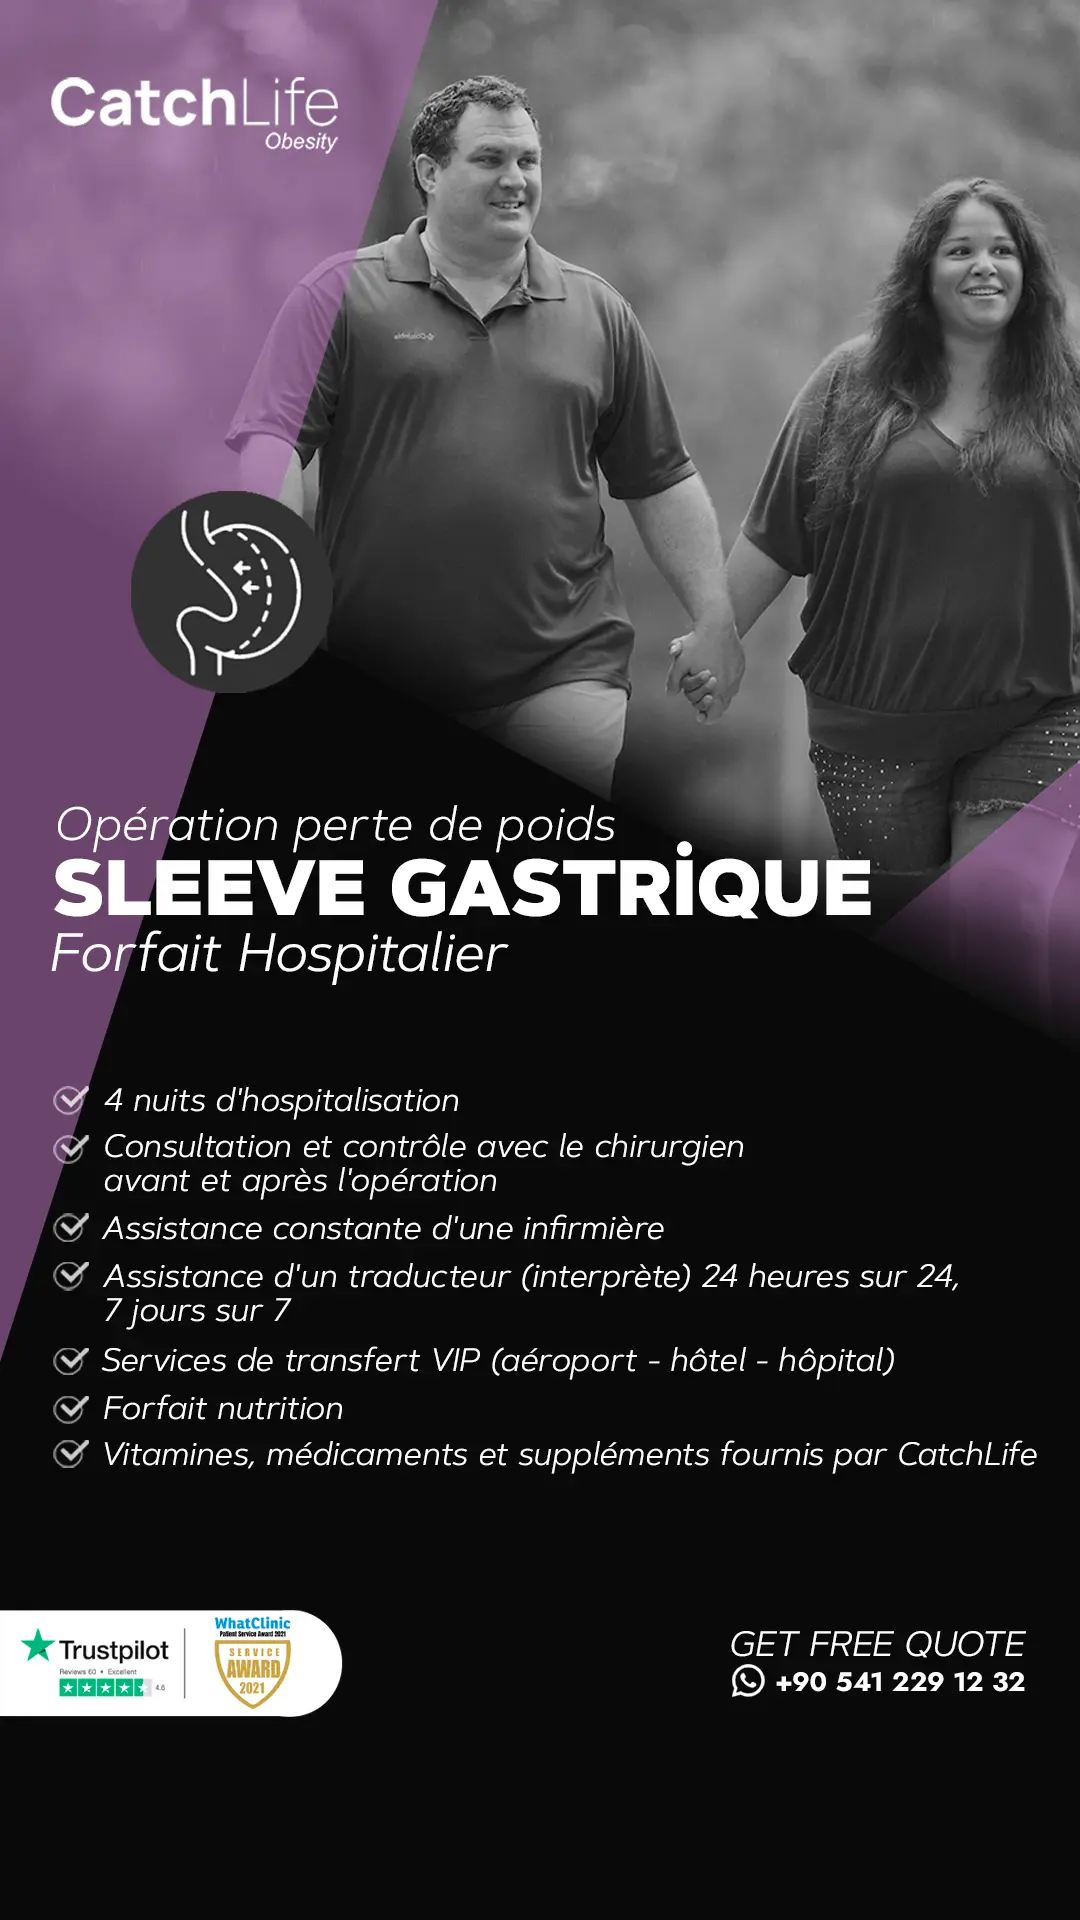 gastric-sleeve-hospital-package-turkey-img-fr